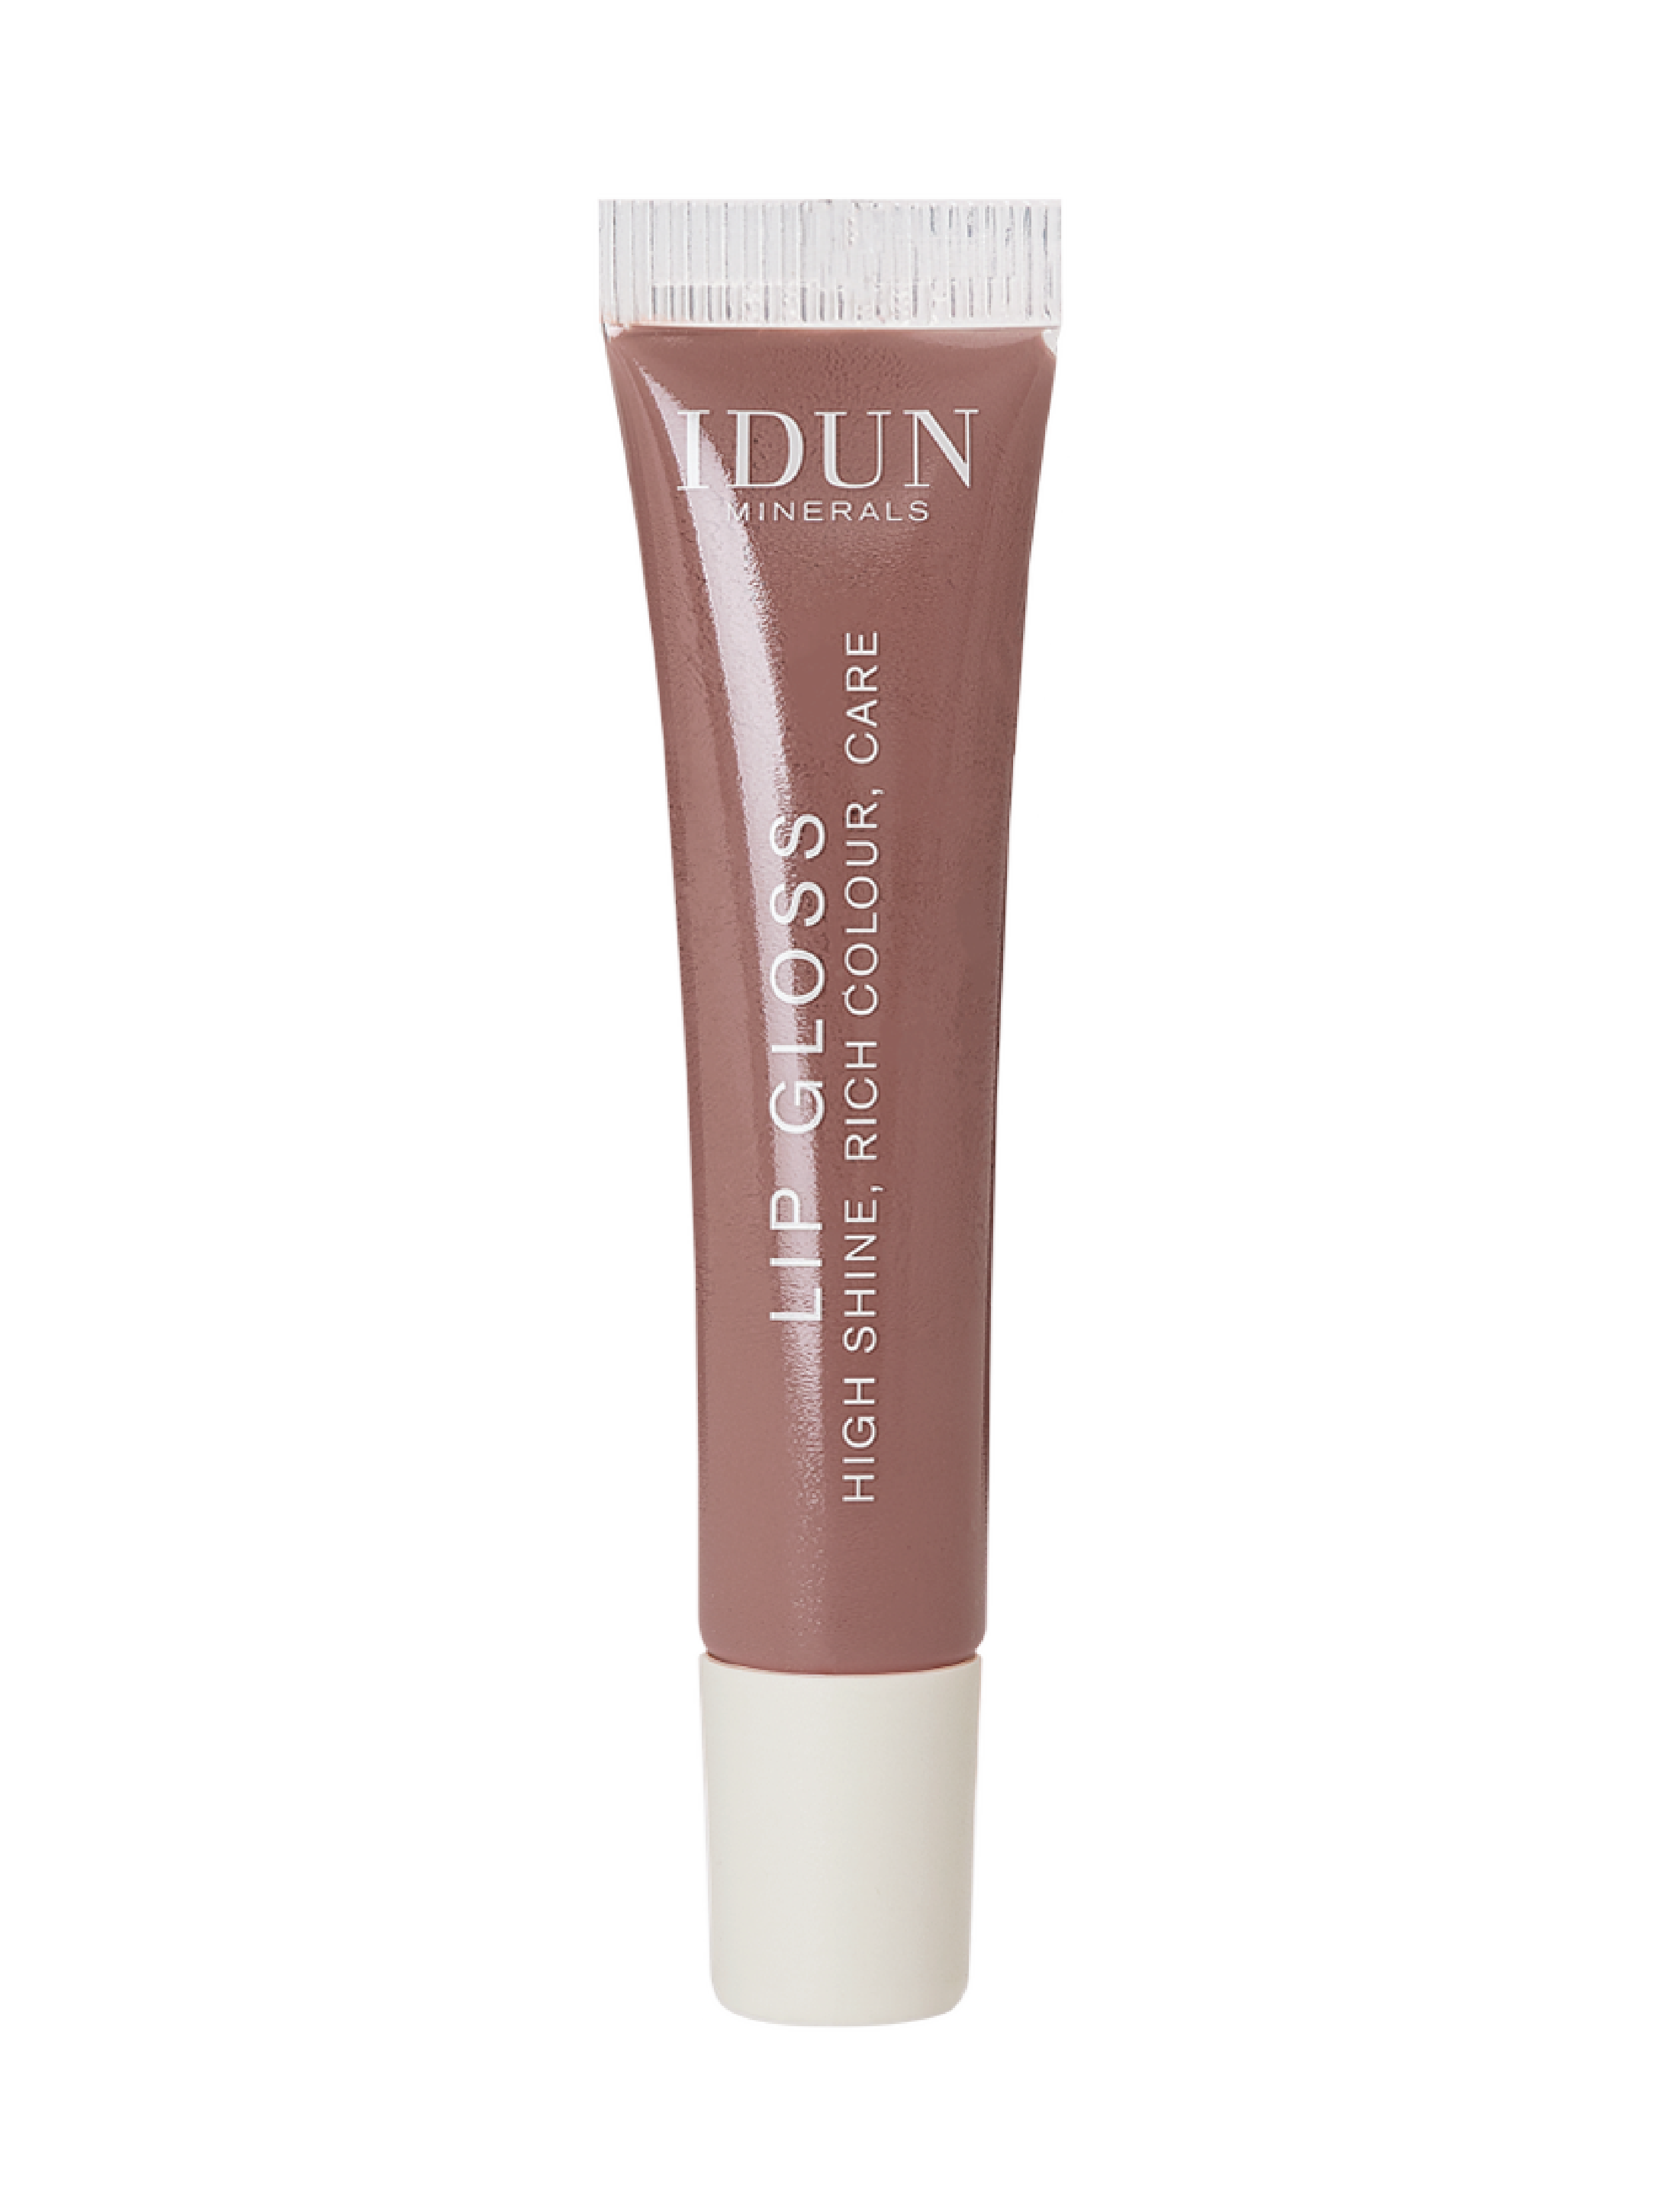 IDUN Minerals Lipgloss, Josephine, 6 ml